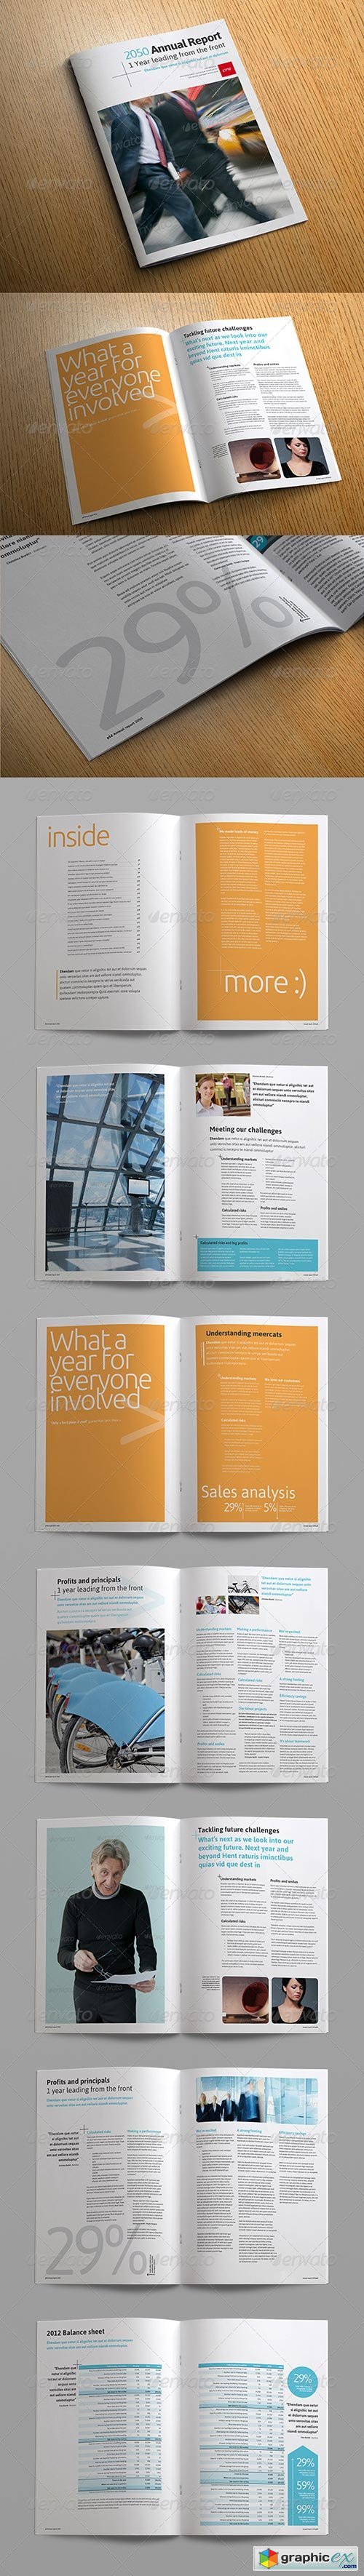 Annual Report / Corporate Brochure